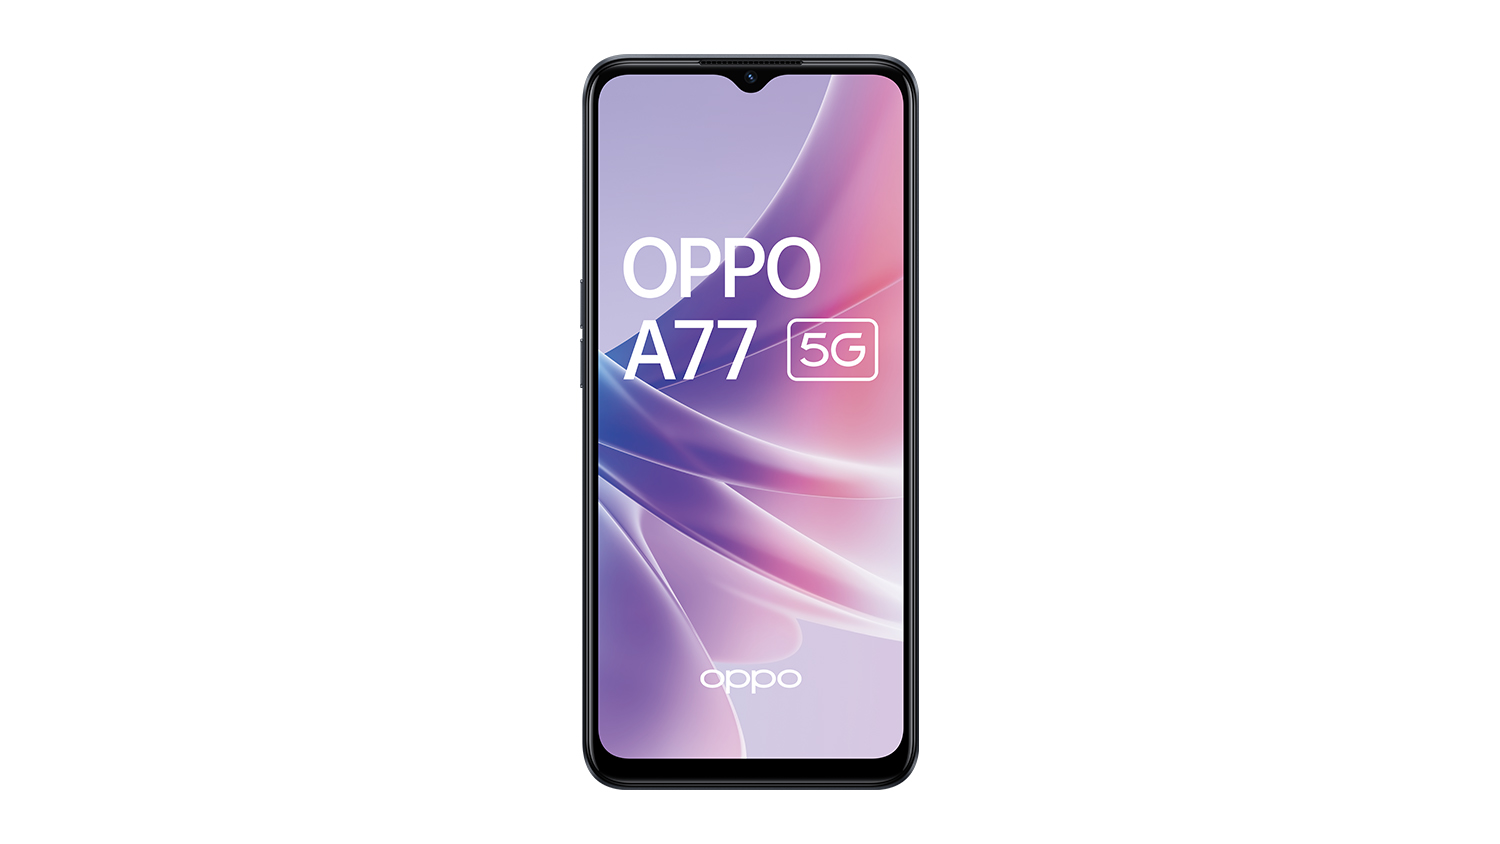 OPPO A77 5G 64GB Smartphone - Midnight Black (Spark/Open Network 